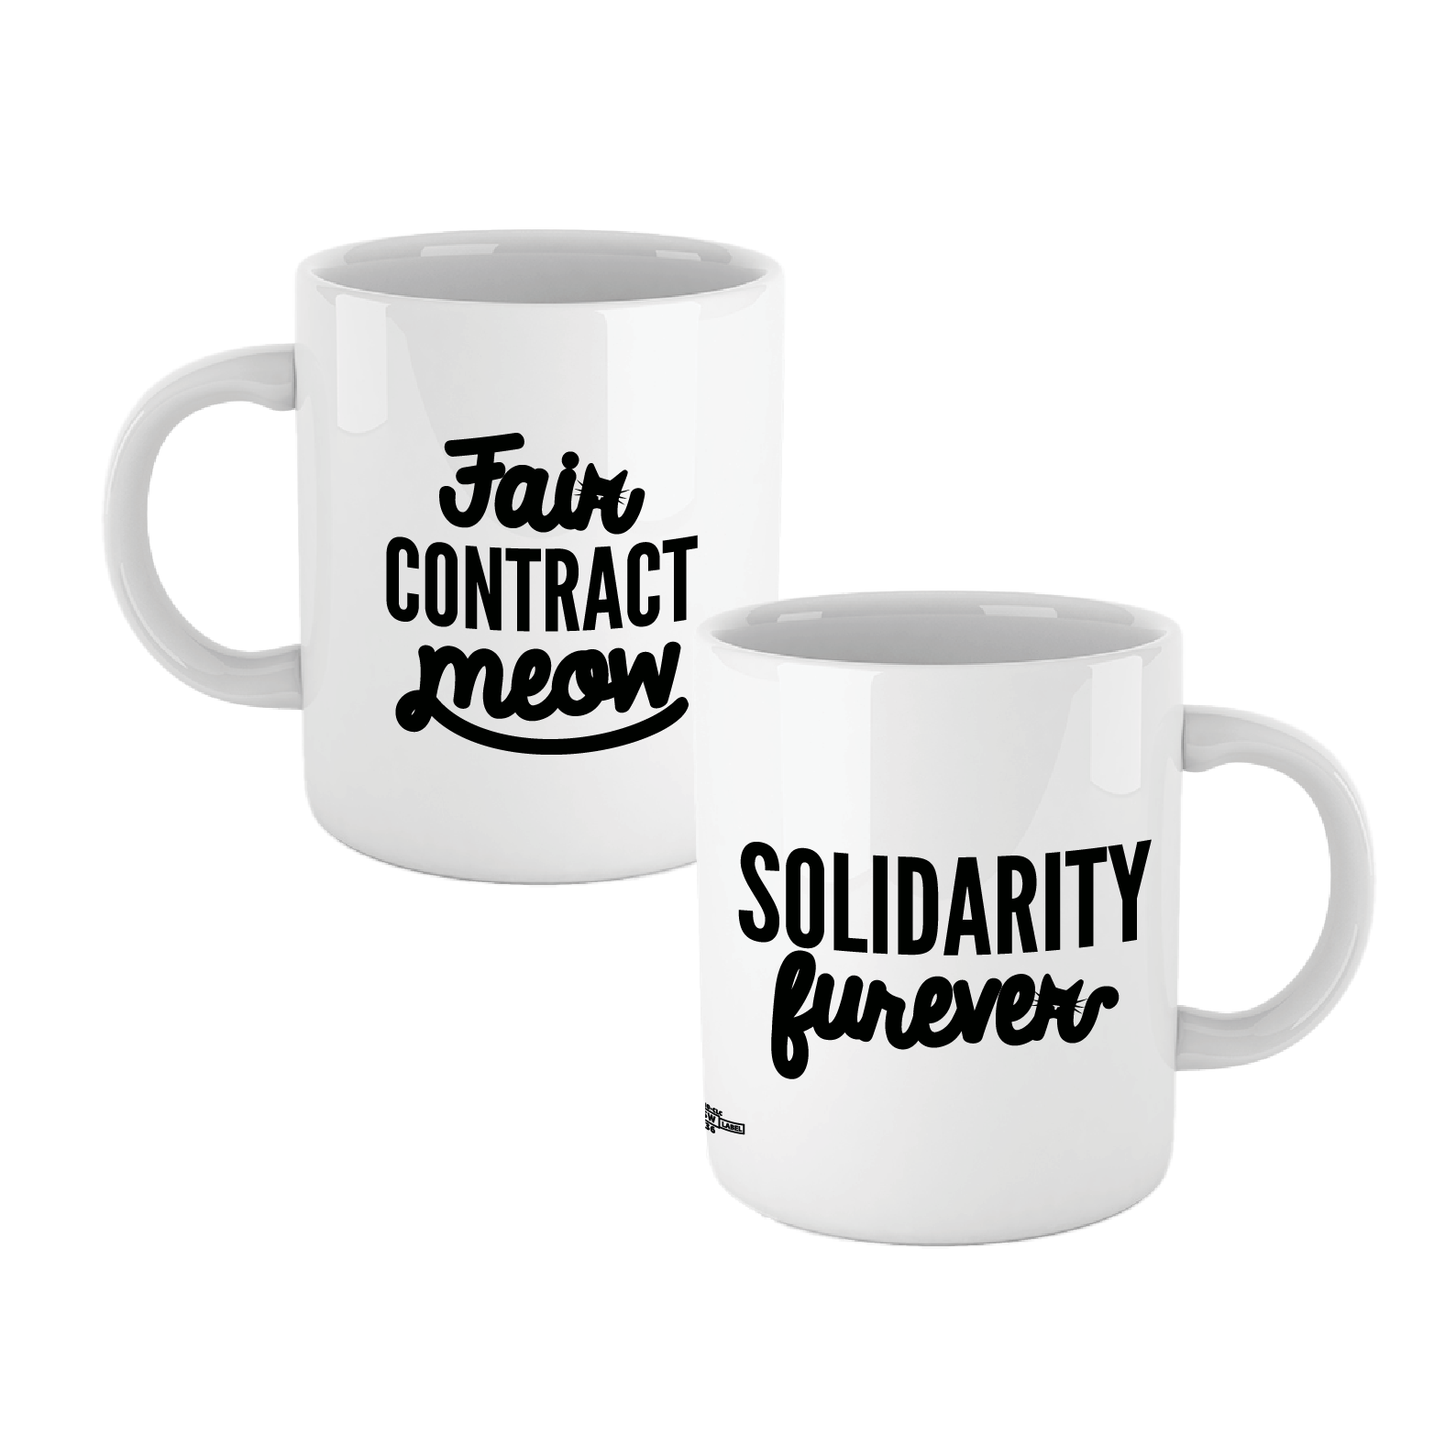 Fair Contract Meow/Solidarity Furever Mug